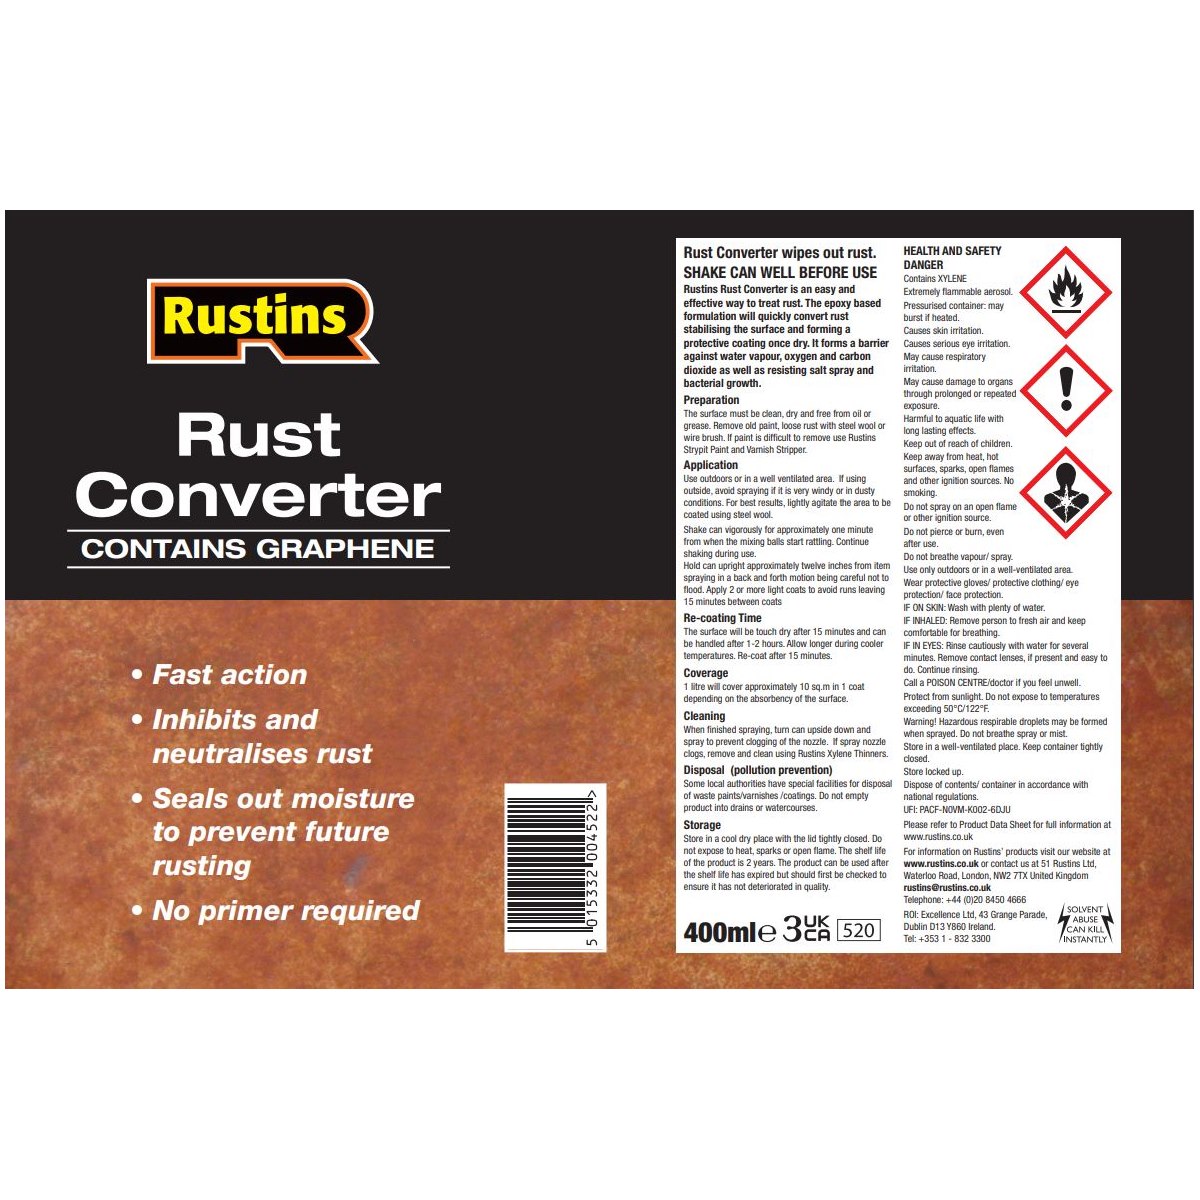 How to Use Rustins Rust Converter 400ml Aerosol